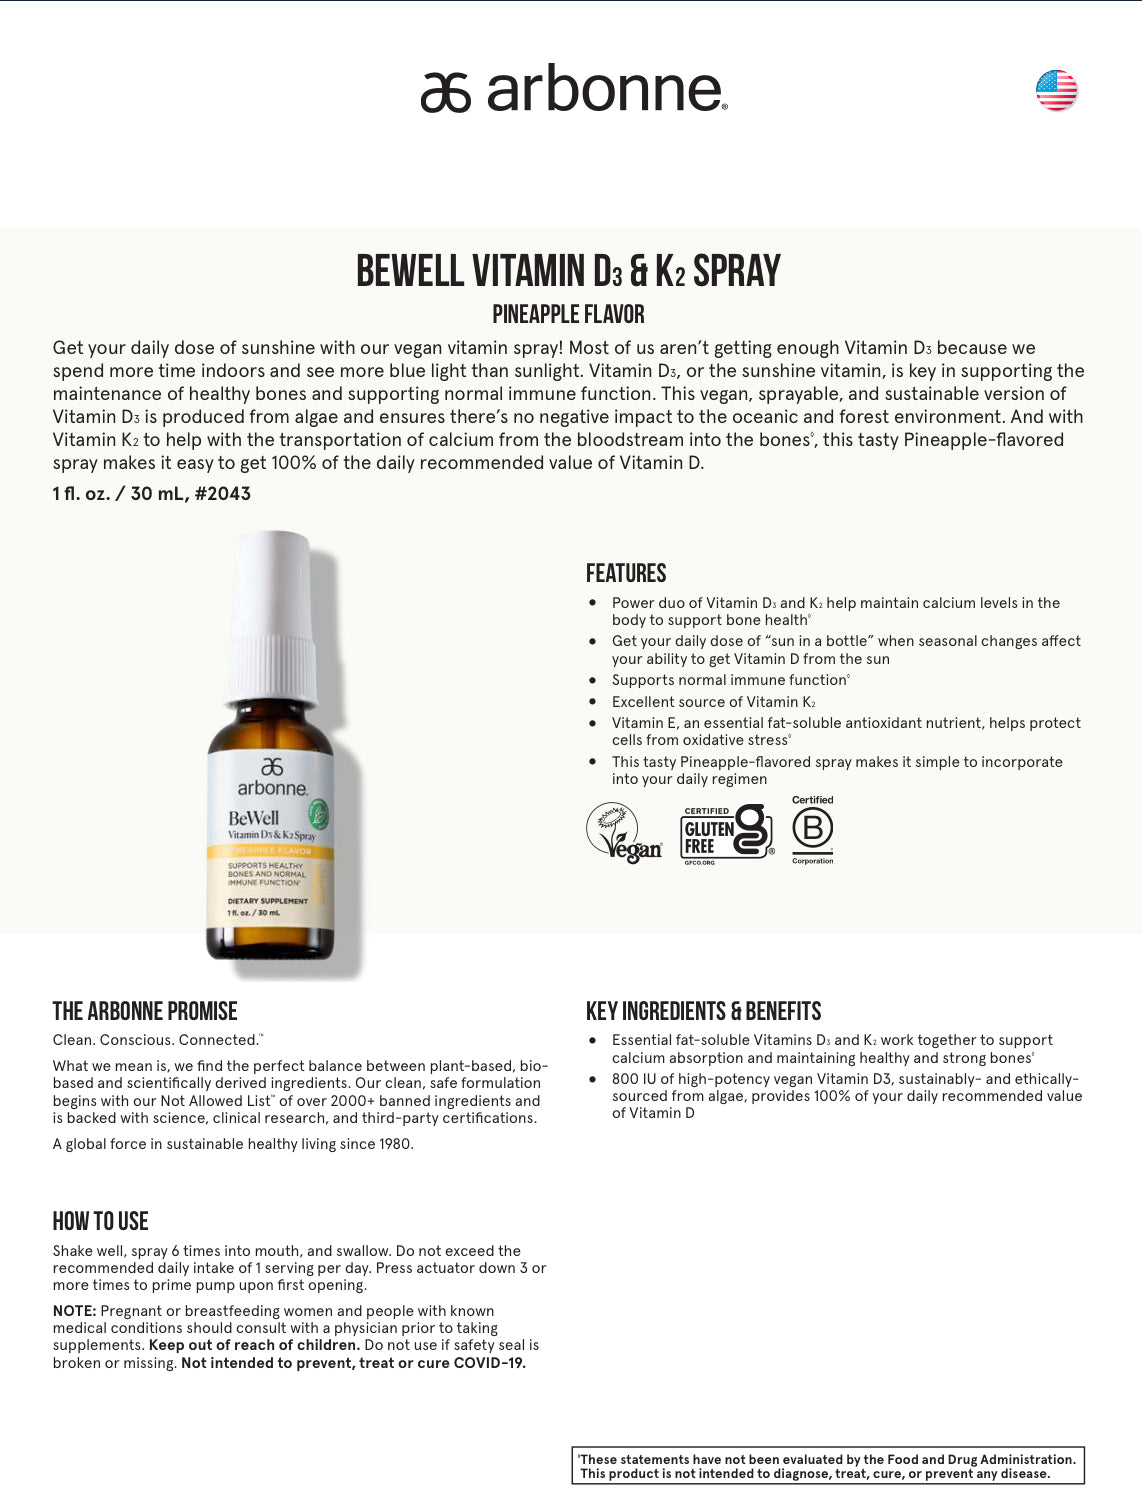 BeWell Vitamin D3 & K2 Spray